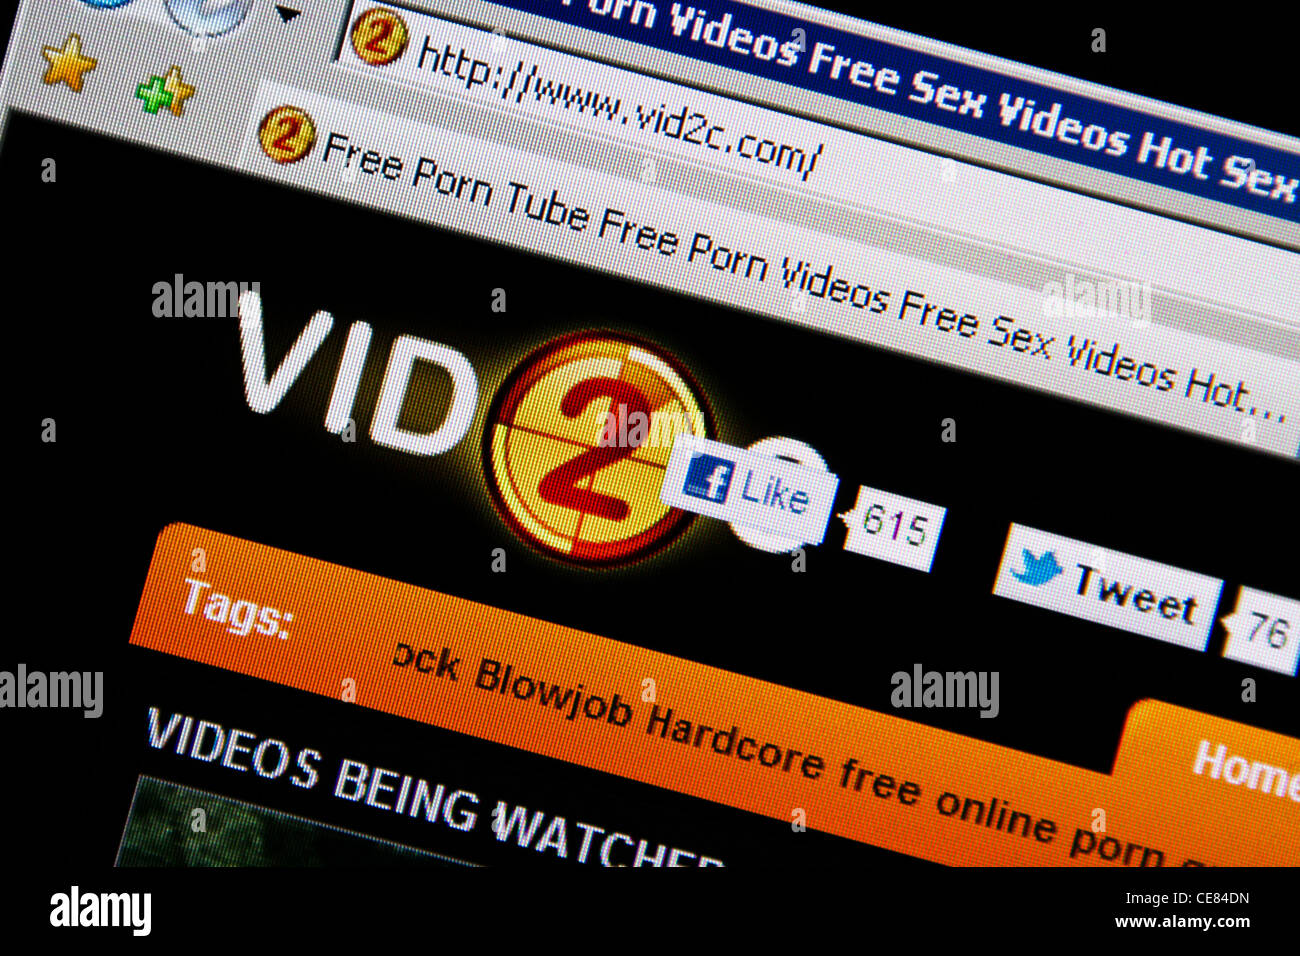 sex video movie online website vid2c Stock Photo image picture